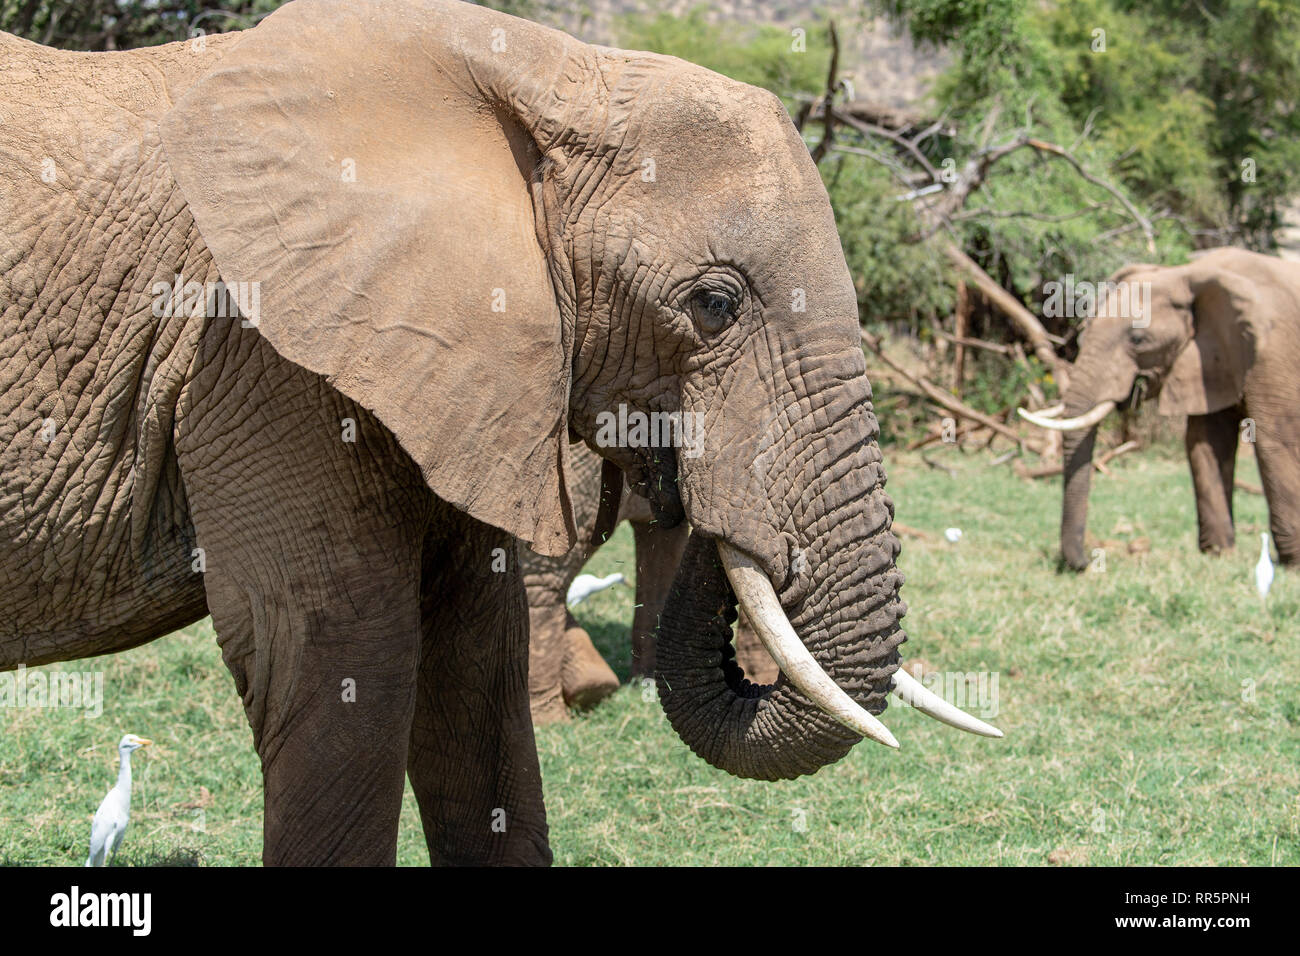 African bush elephant (Loxodanta africana) in Kenya Stock Photo